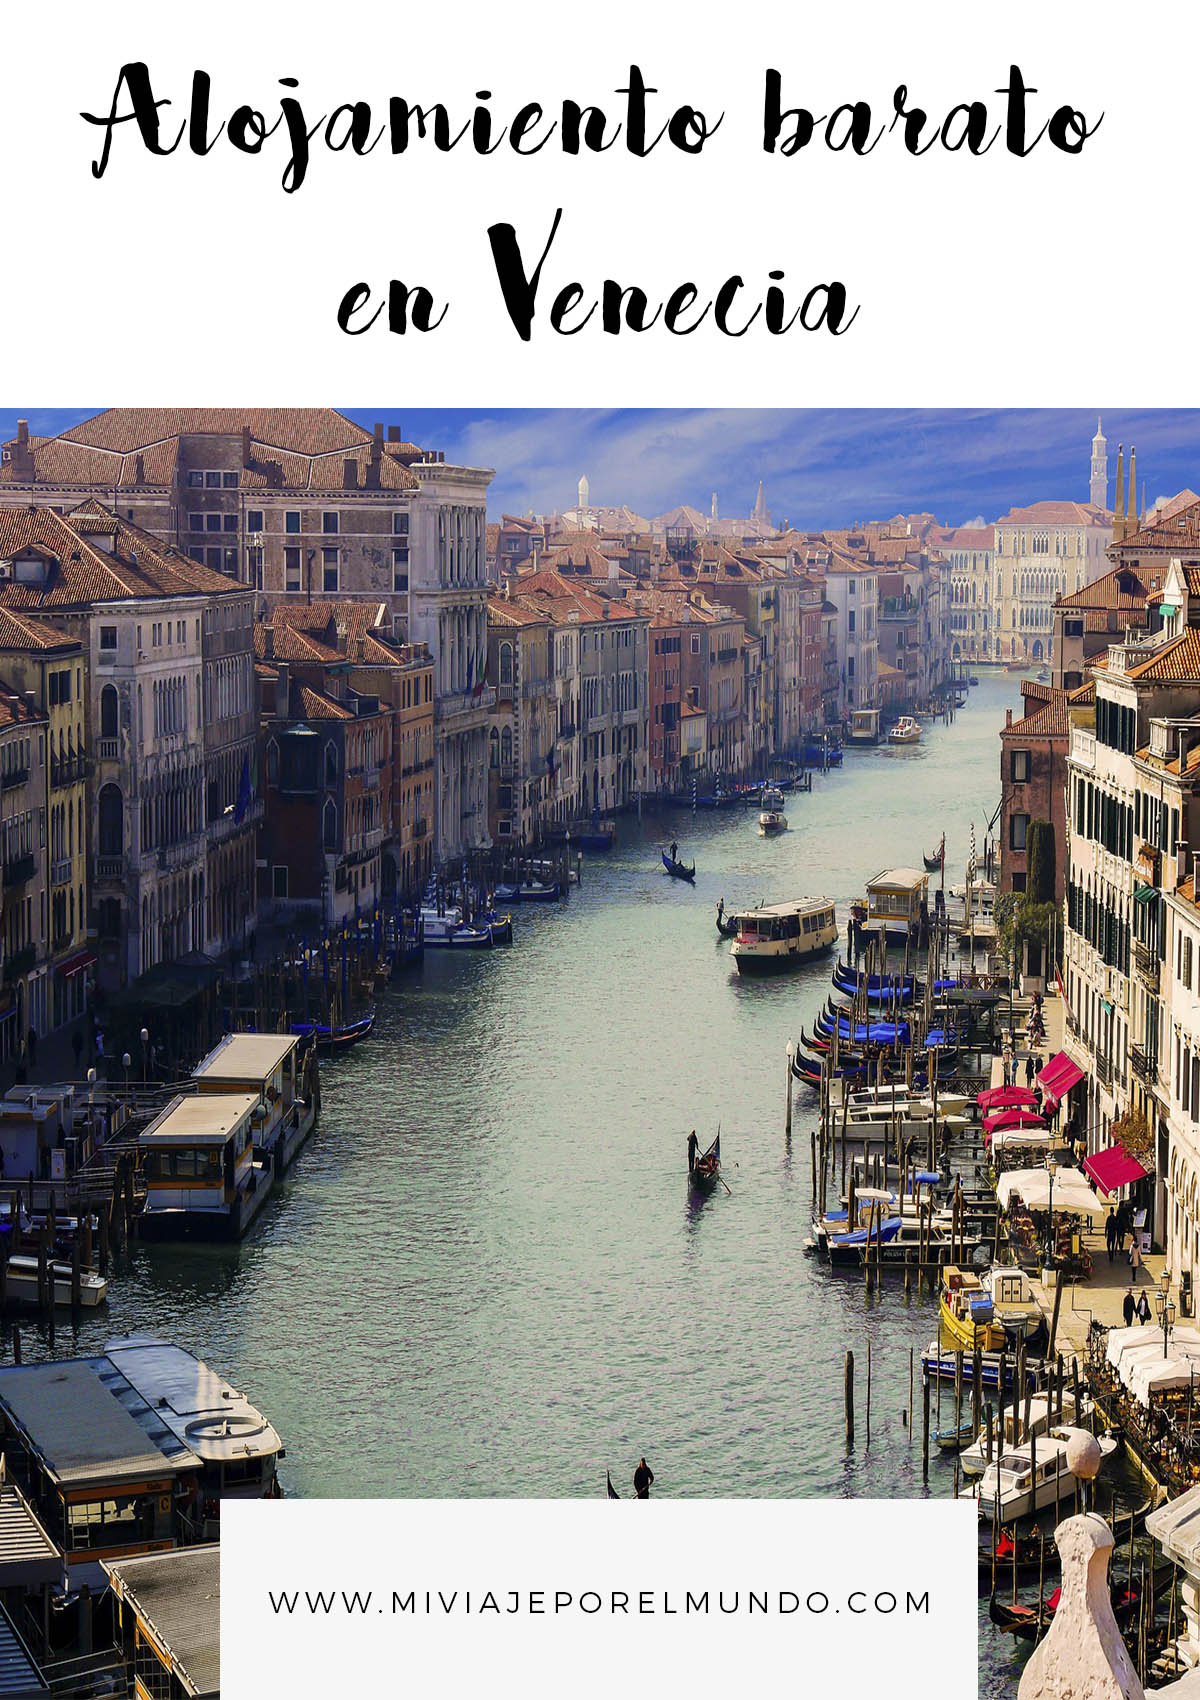 hoteles baratos en venecia